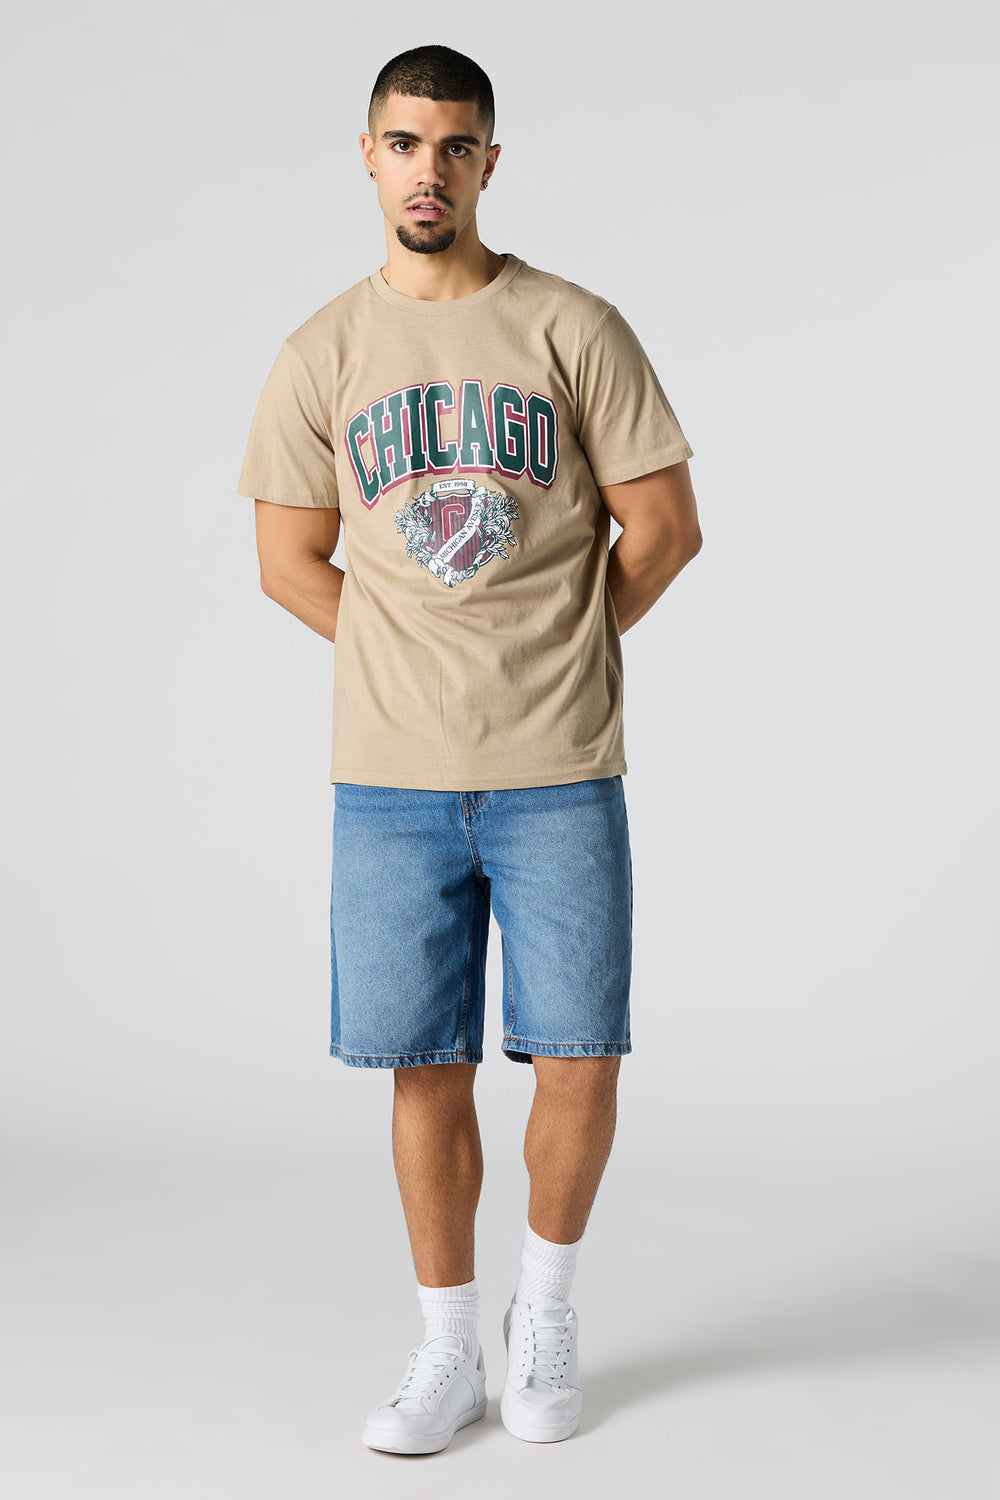 Chicago Graphic T-Shirt Chicago Graphic T-Shirt 3